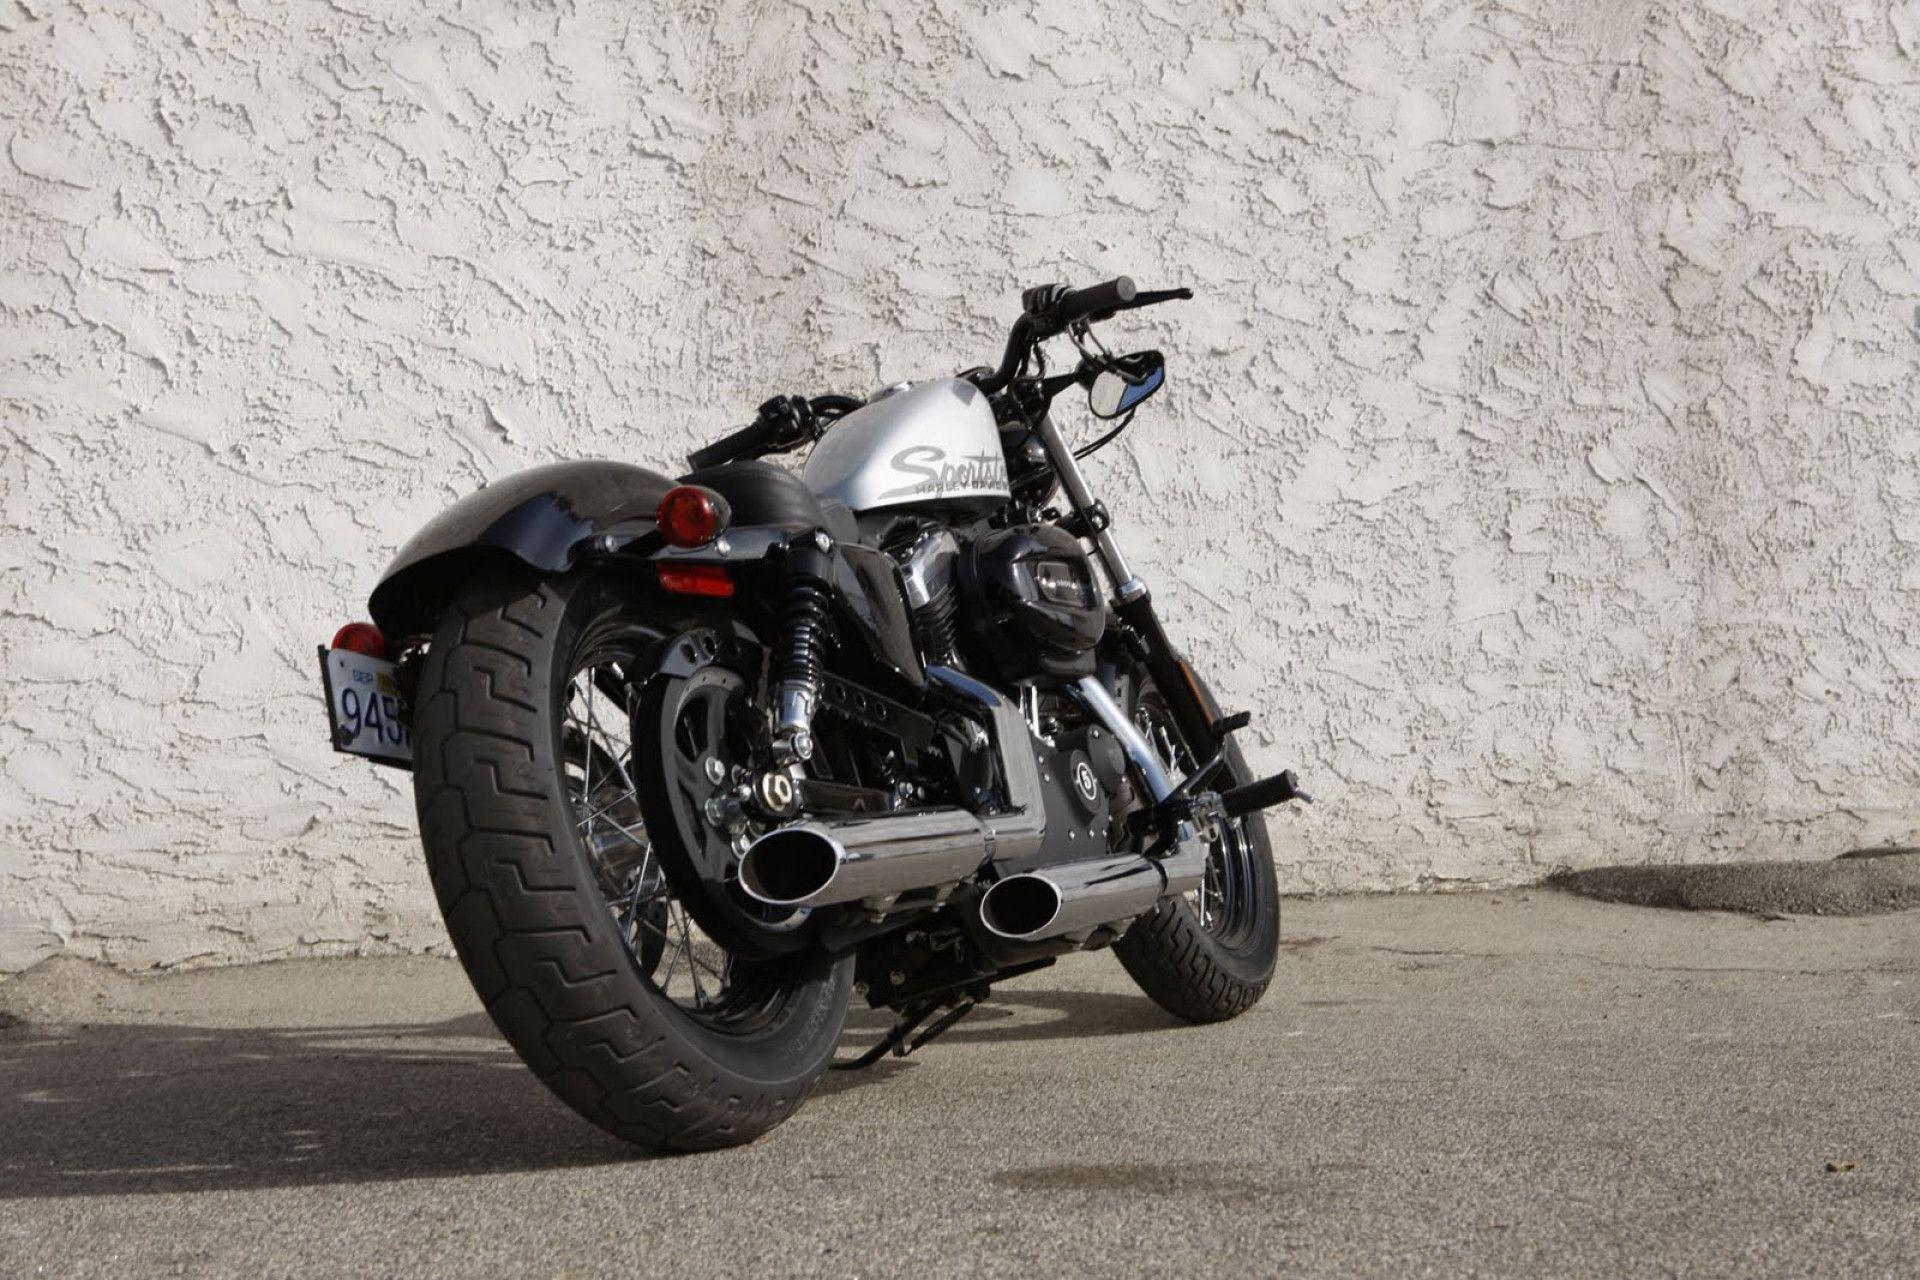 Harley Davidson Bikes Wallpapers